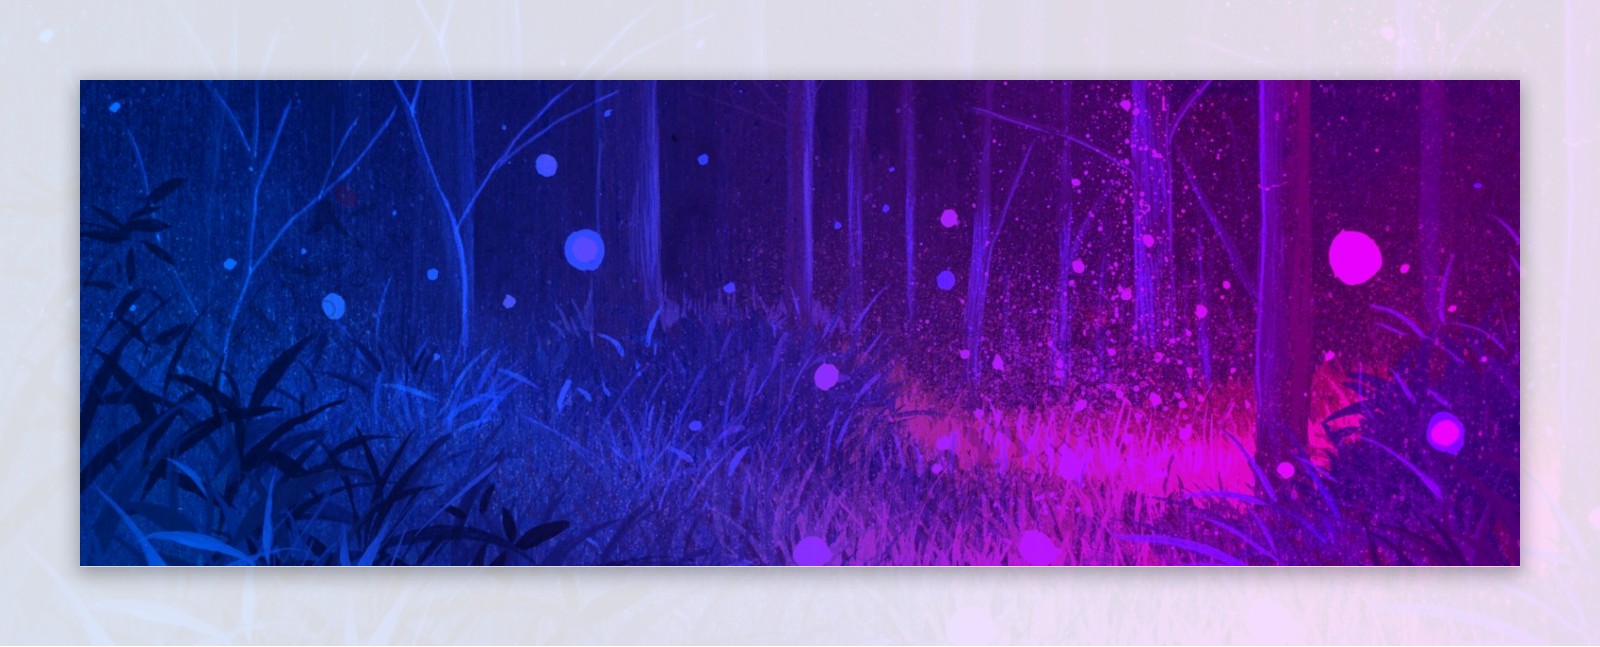 紫色清新森林系banner背景